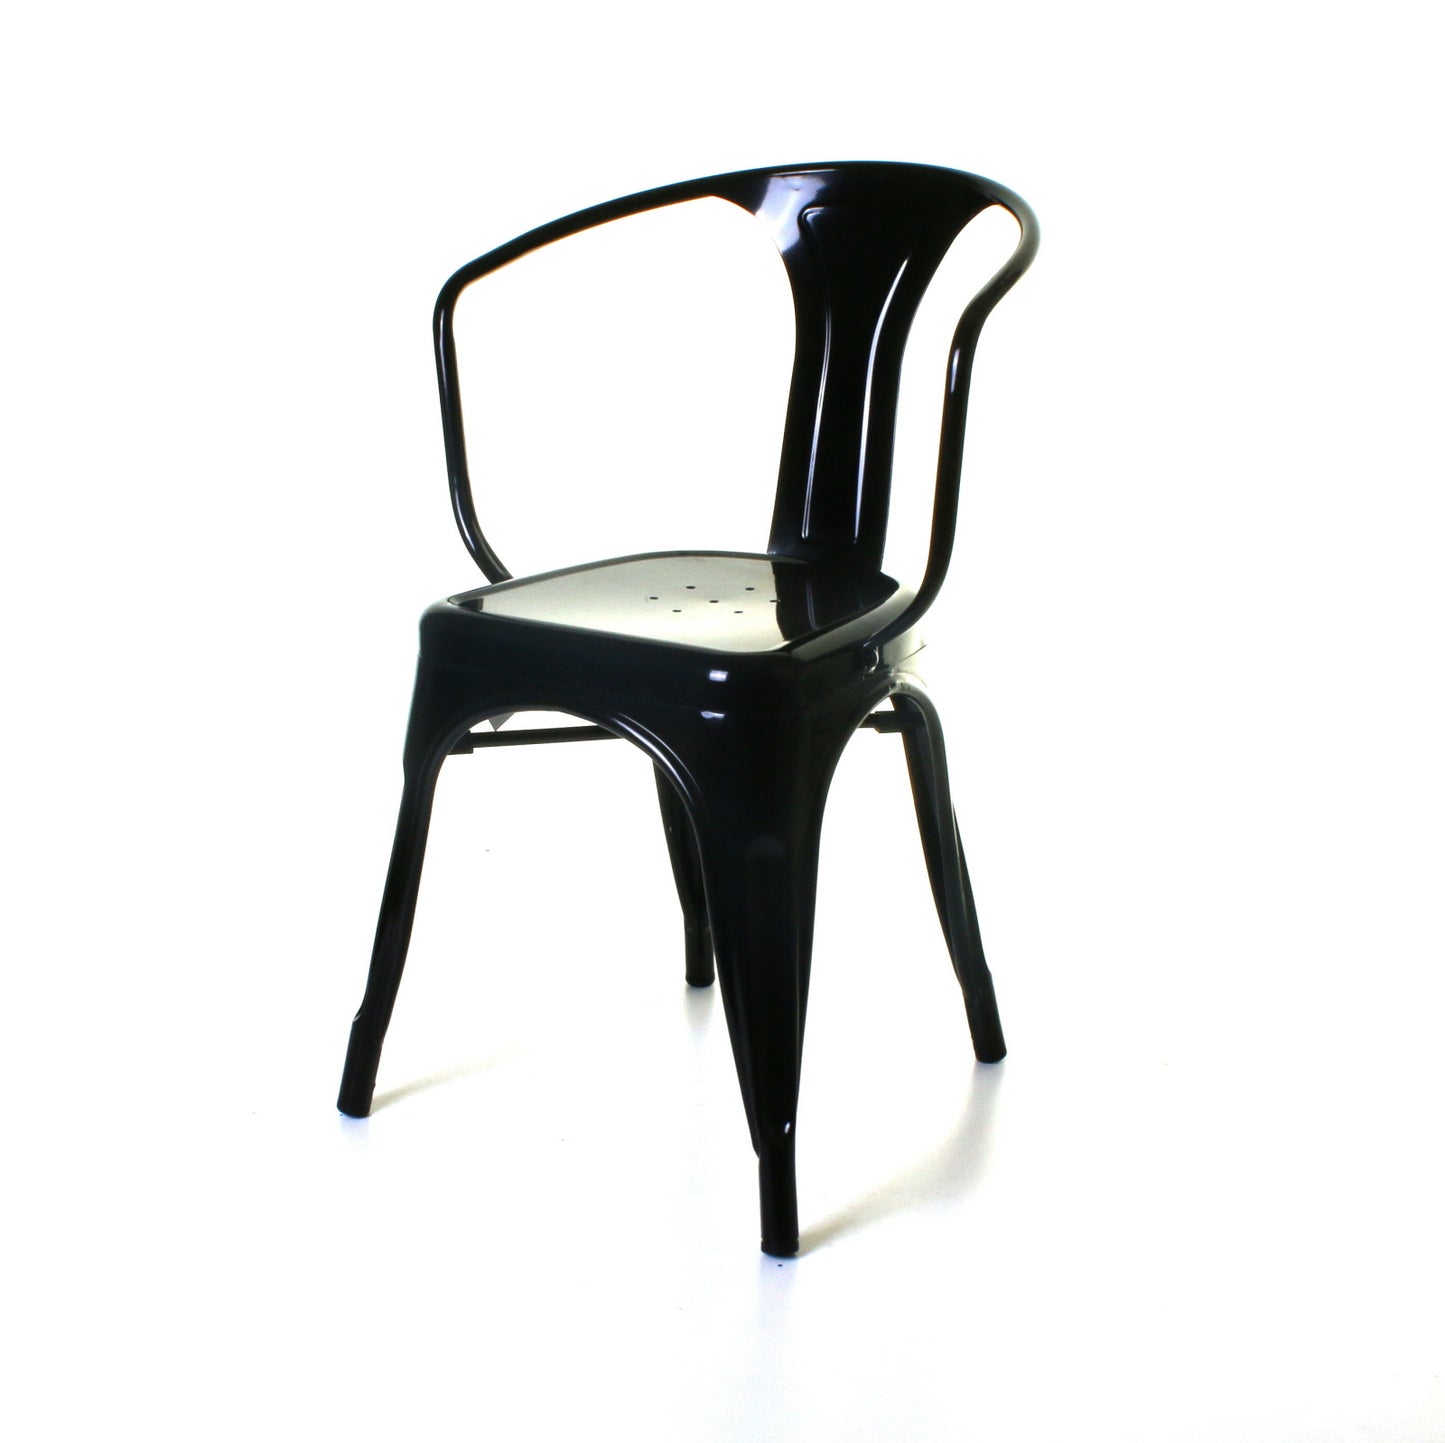 7PC Taranto Table & 6 Forli Chairs Set - Black